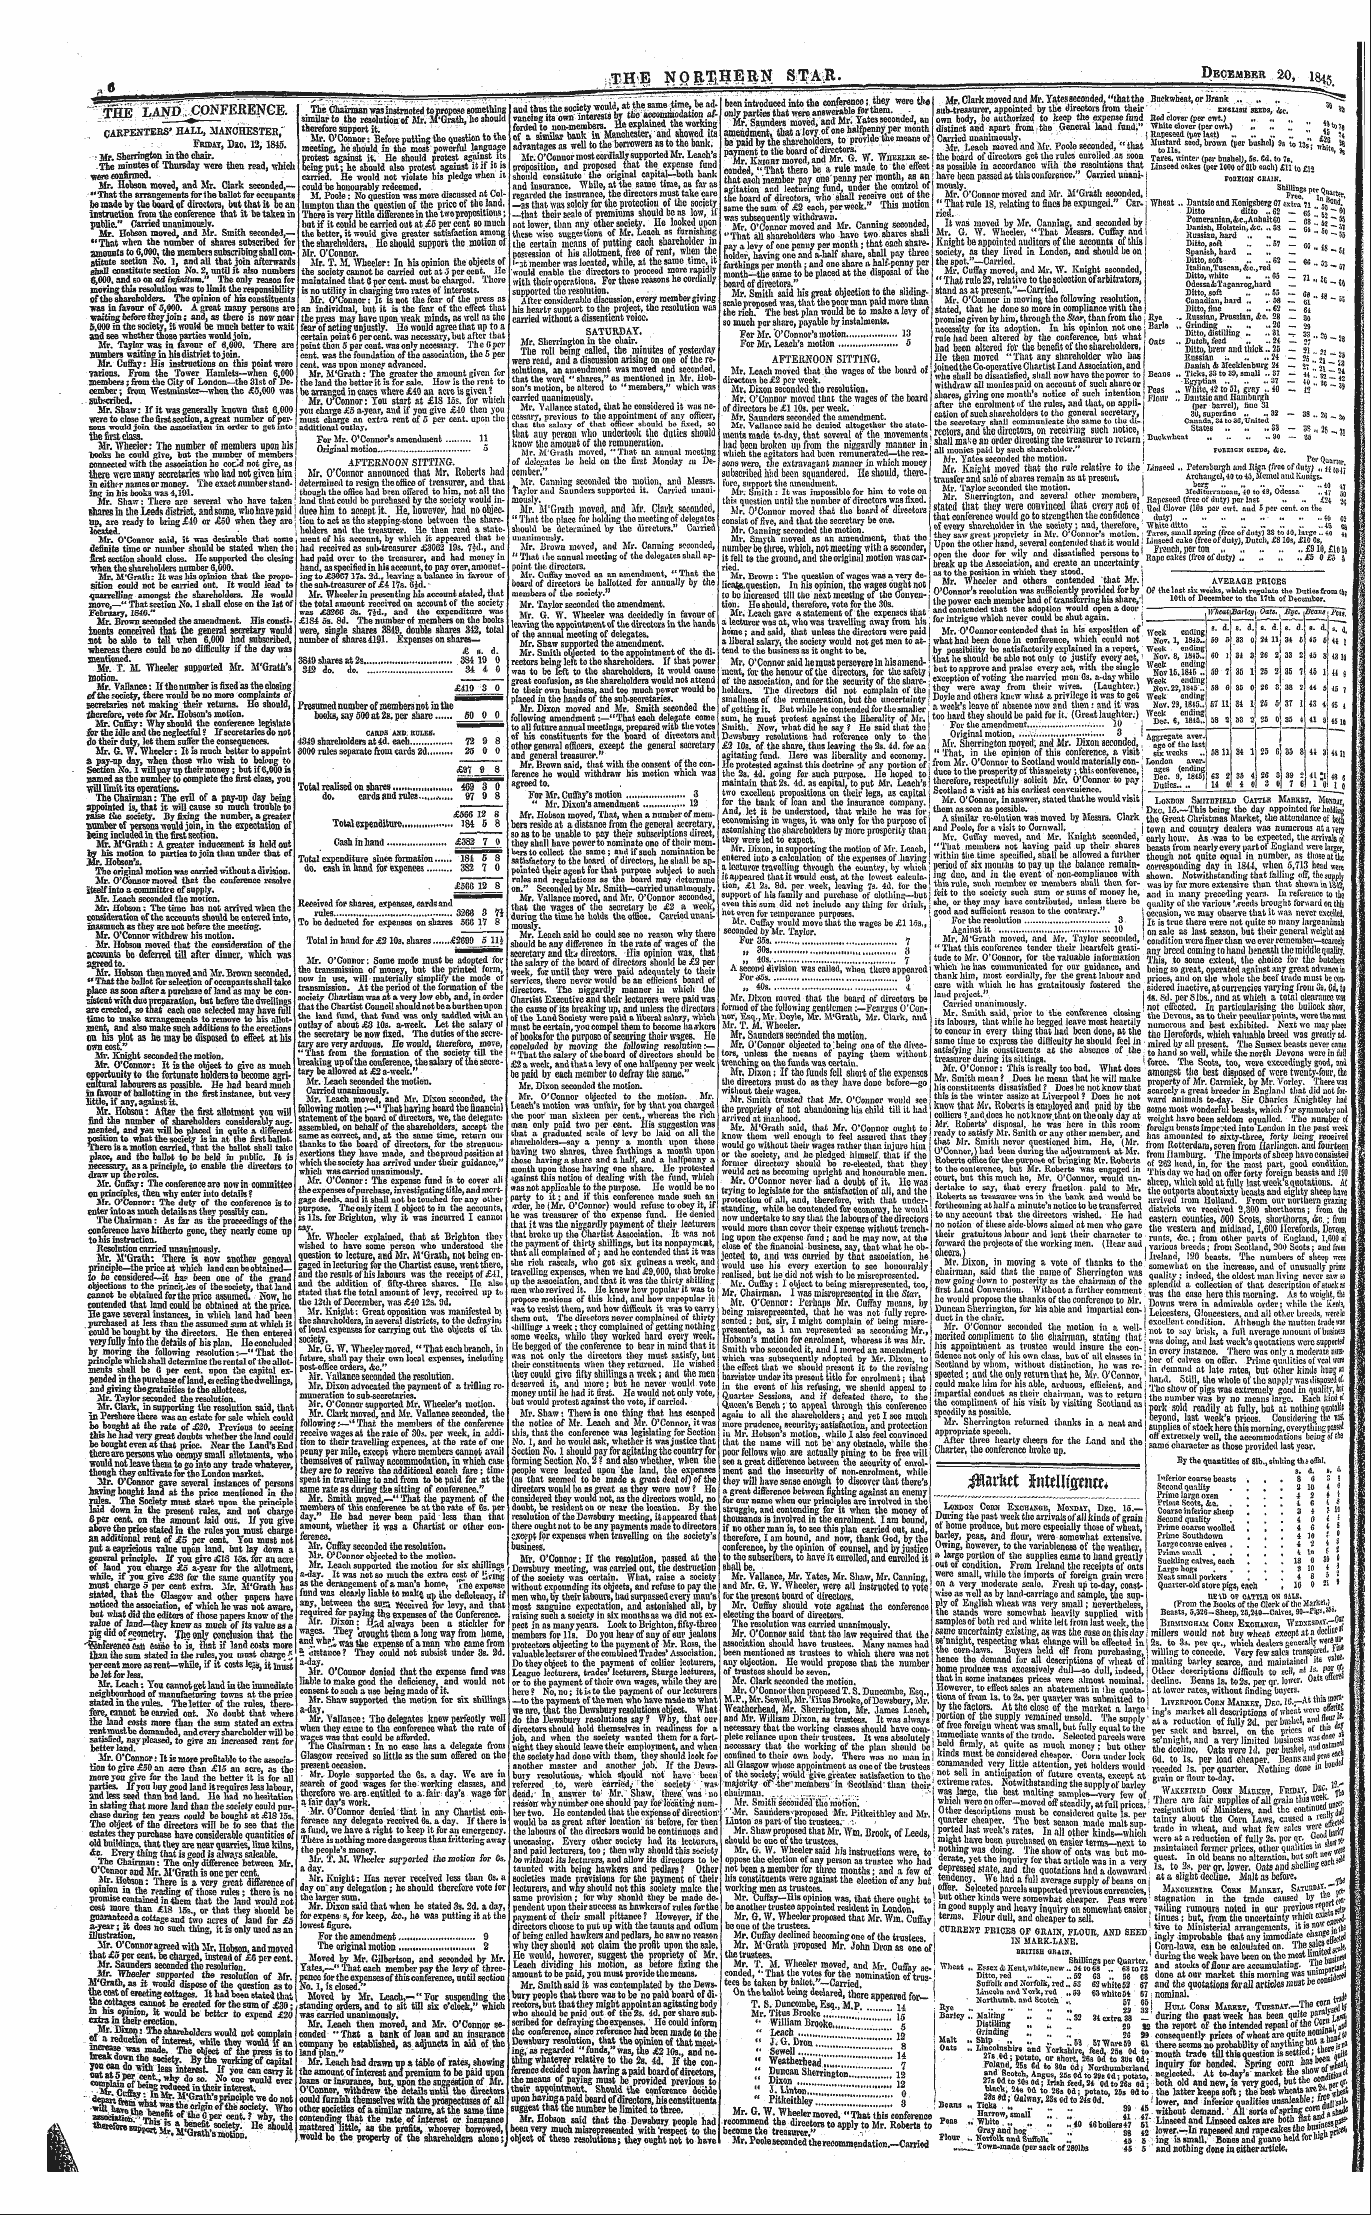 Northern Star (1837-1852): jS F Y, 4th edition - London Corn Exchange, Monday, Dec. 15.— ...